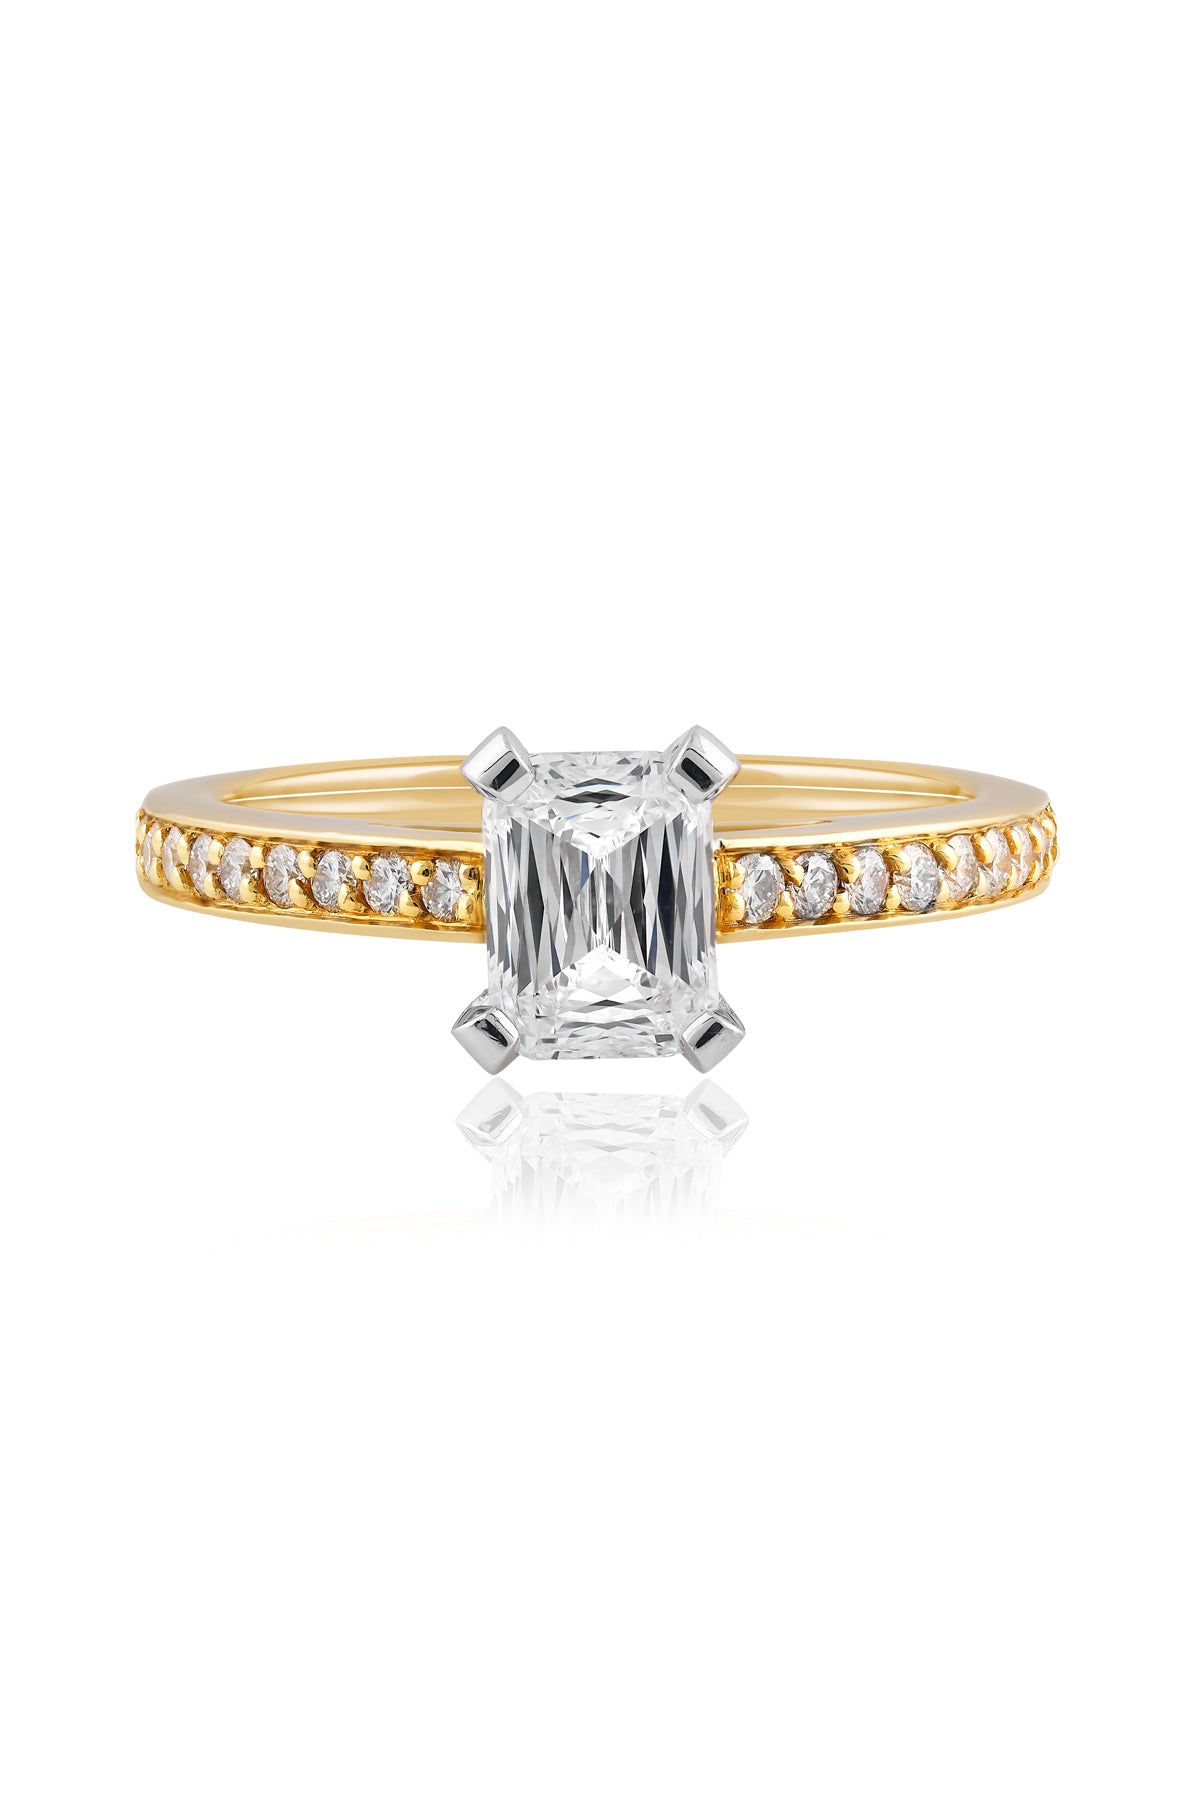 1 Carat Emerald Cut Diamond Engagement Ring from LeGassick Jewellery.